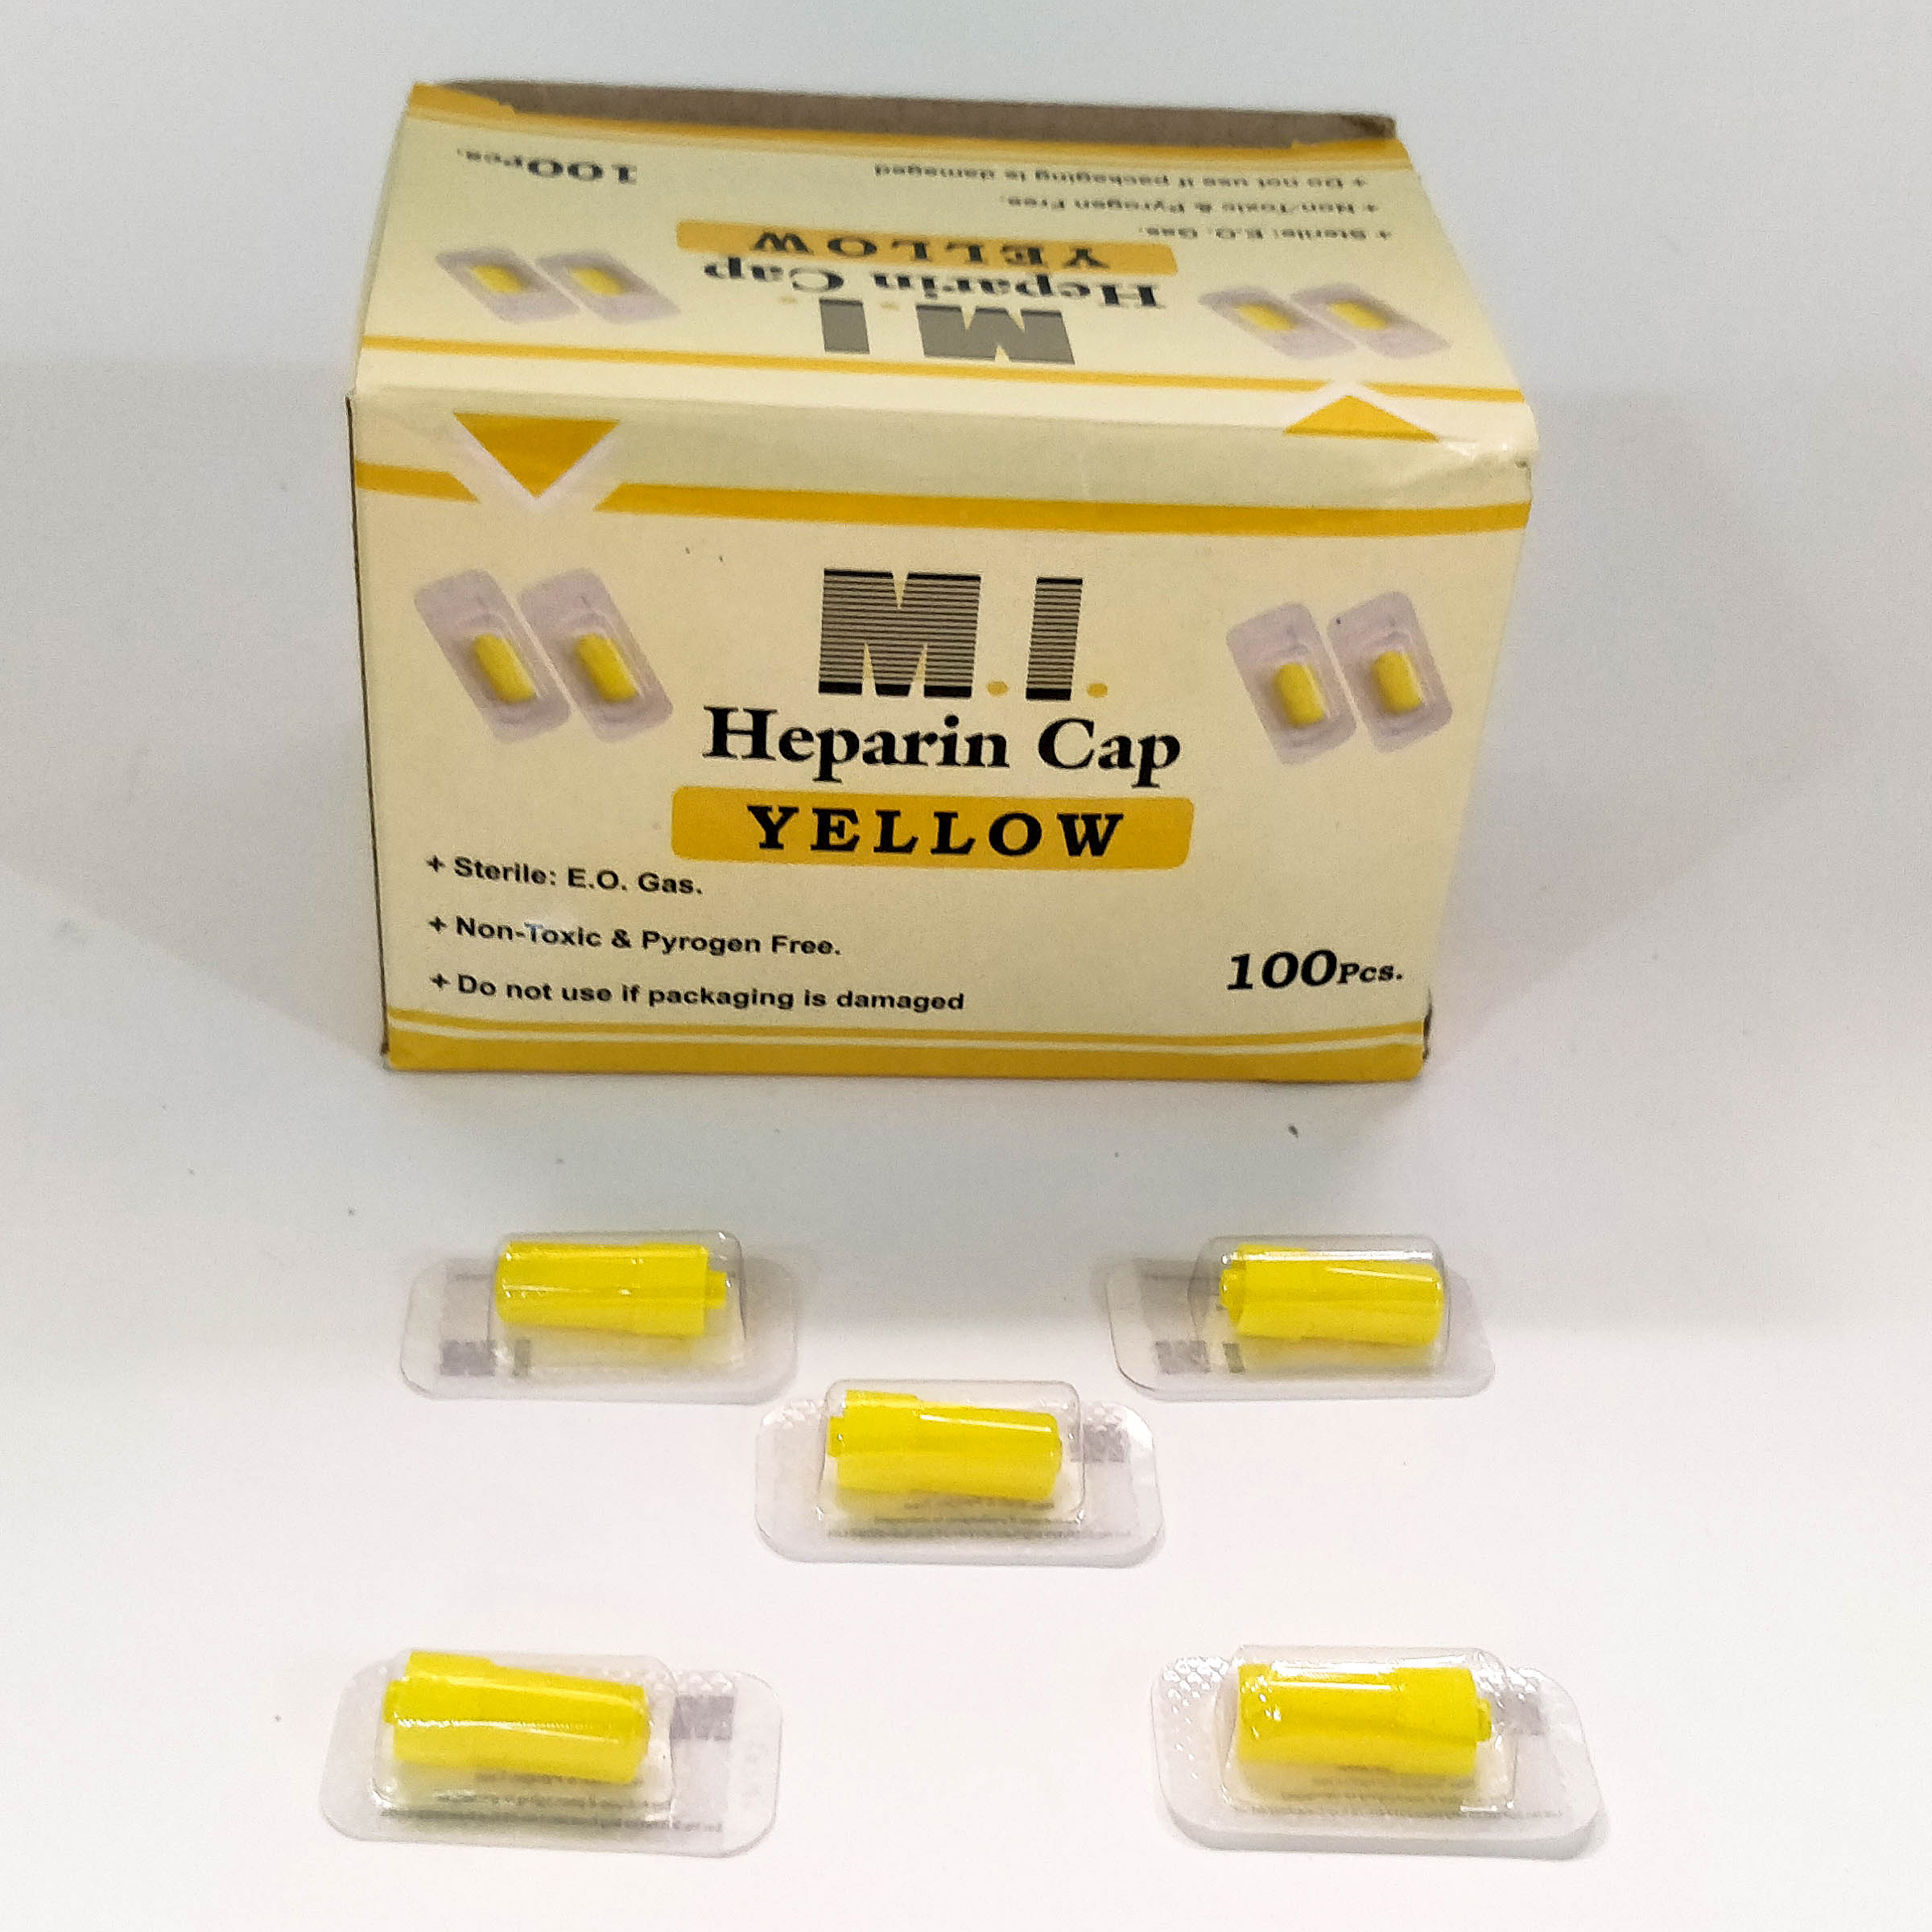 Heparin Cap Yellow